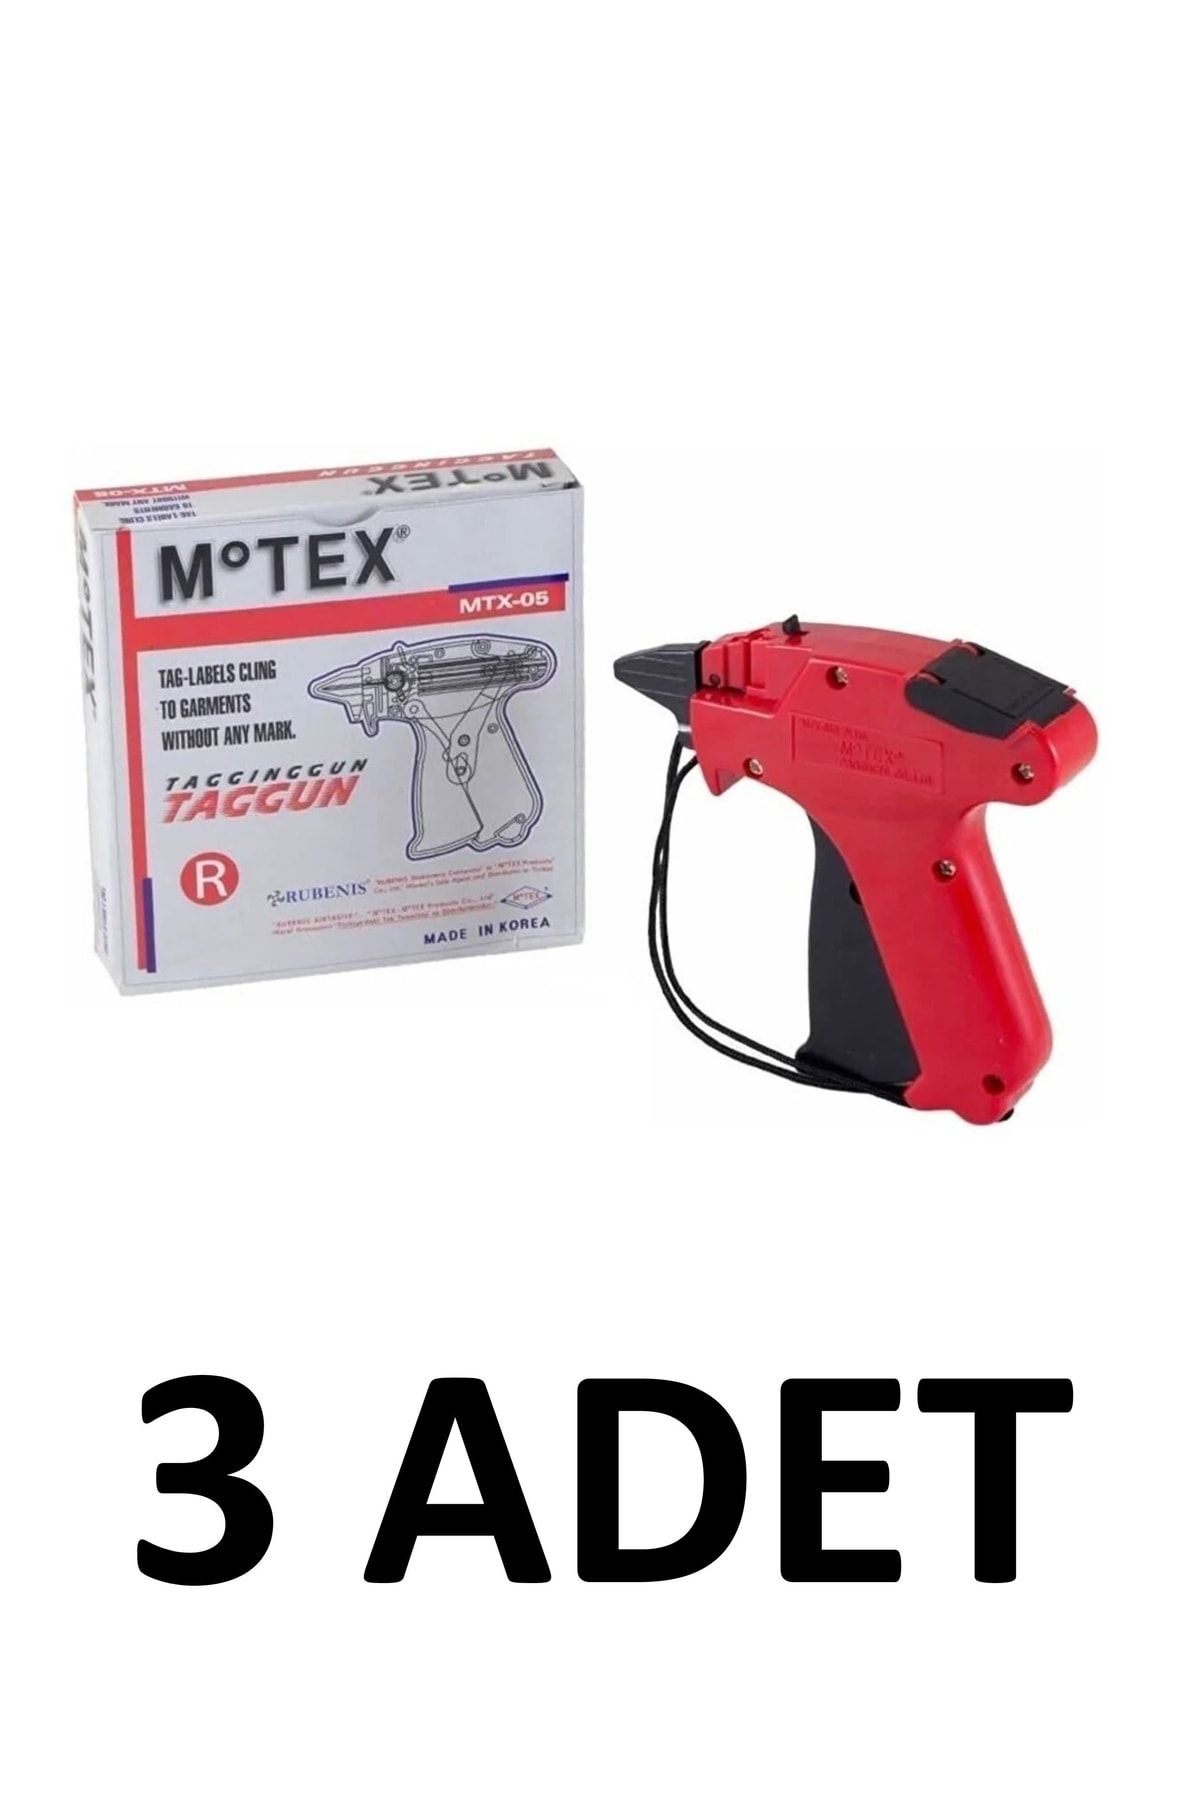 Motex 3 Adet Mtx-05 Etiket Kılçık Tabancası